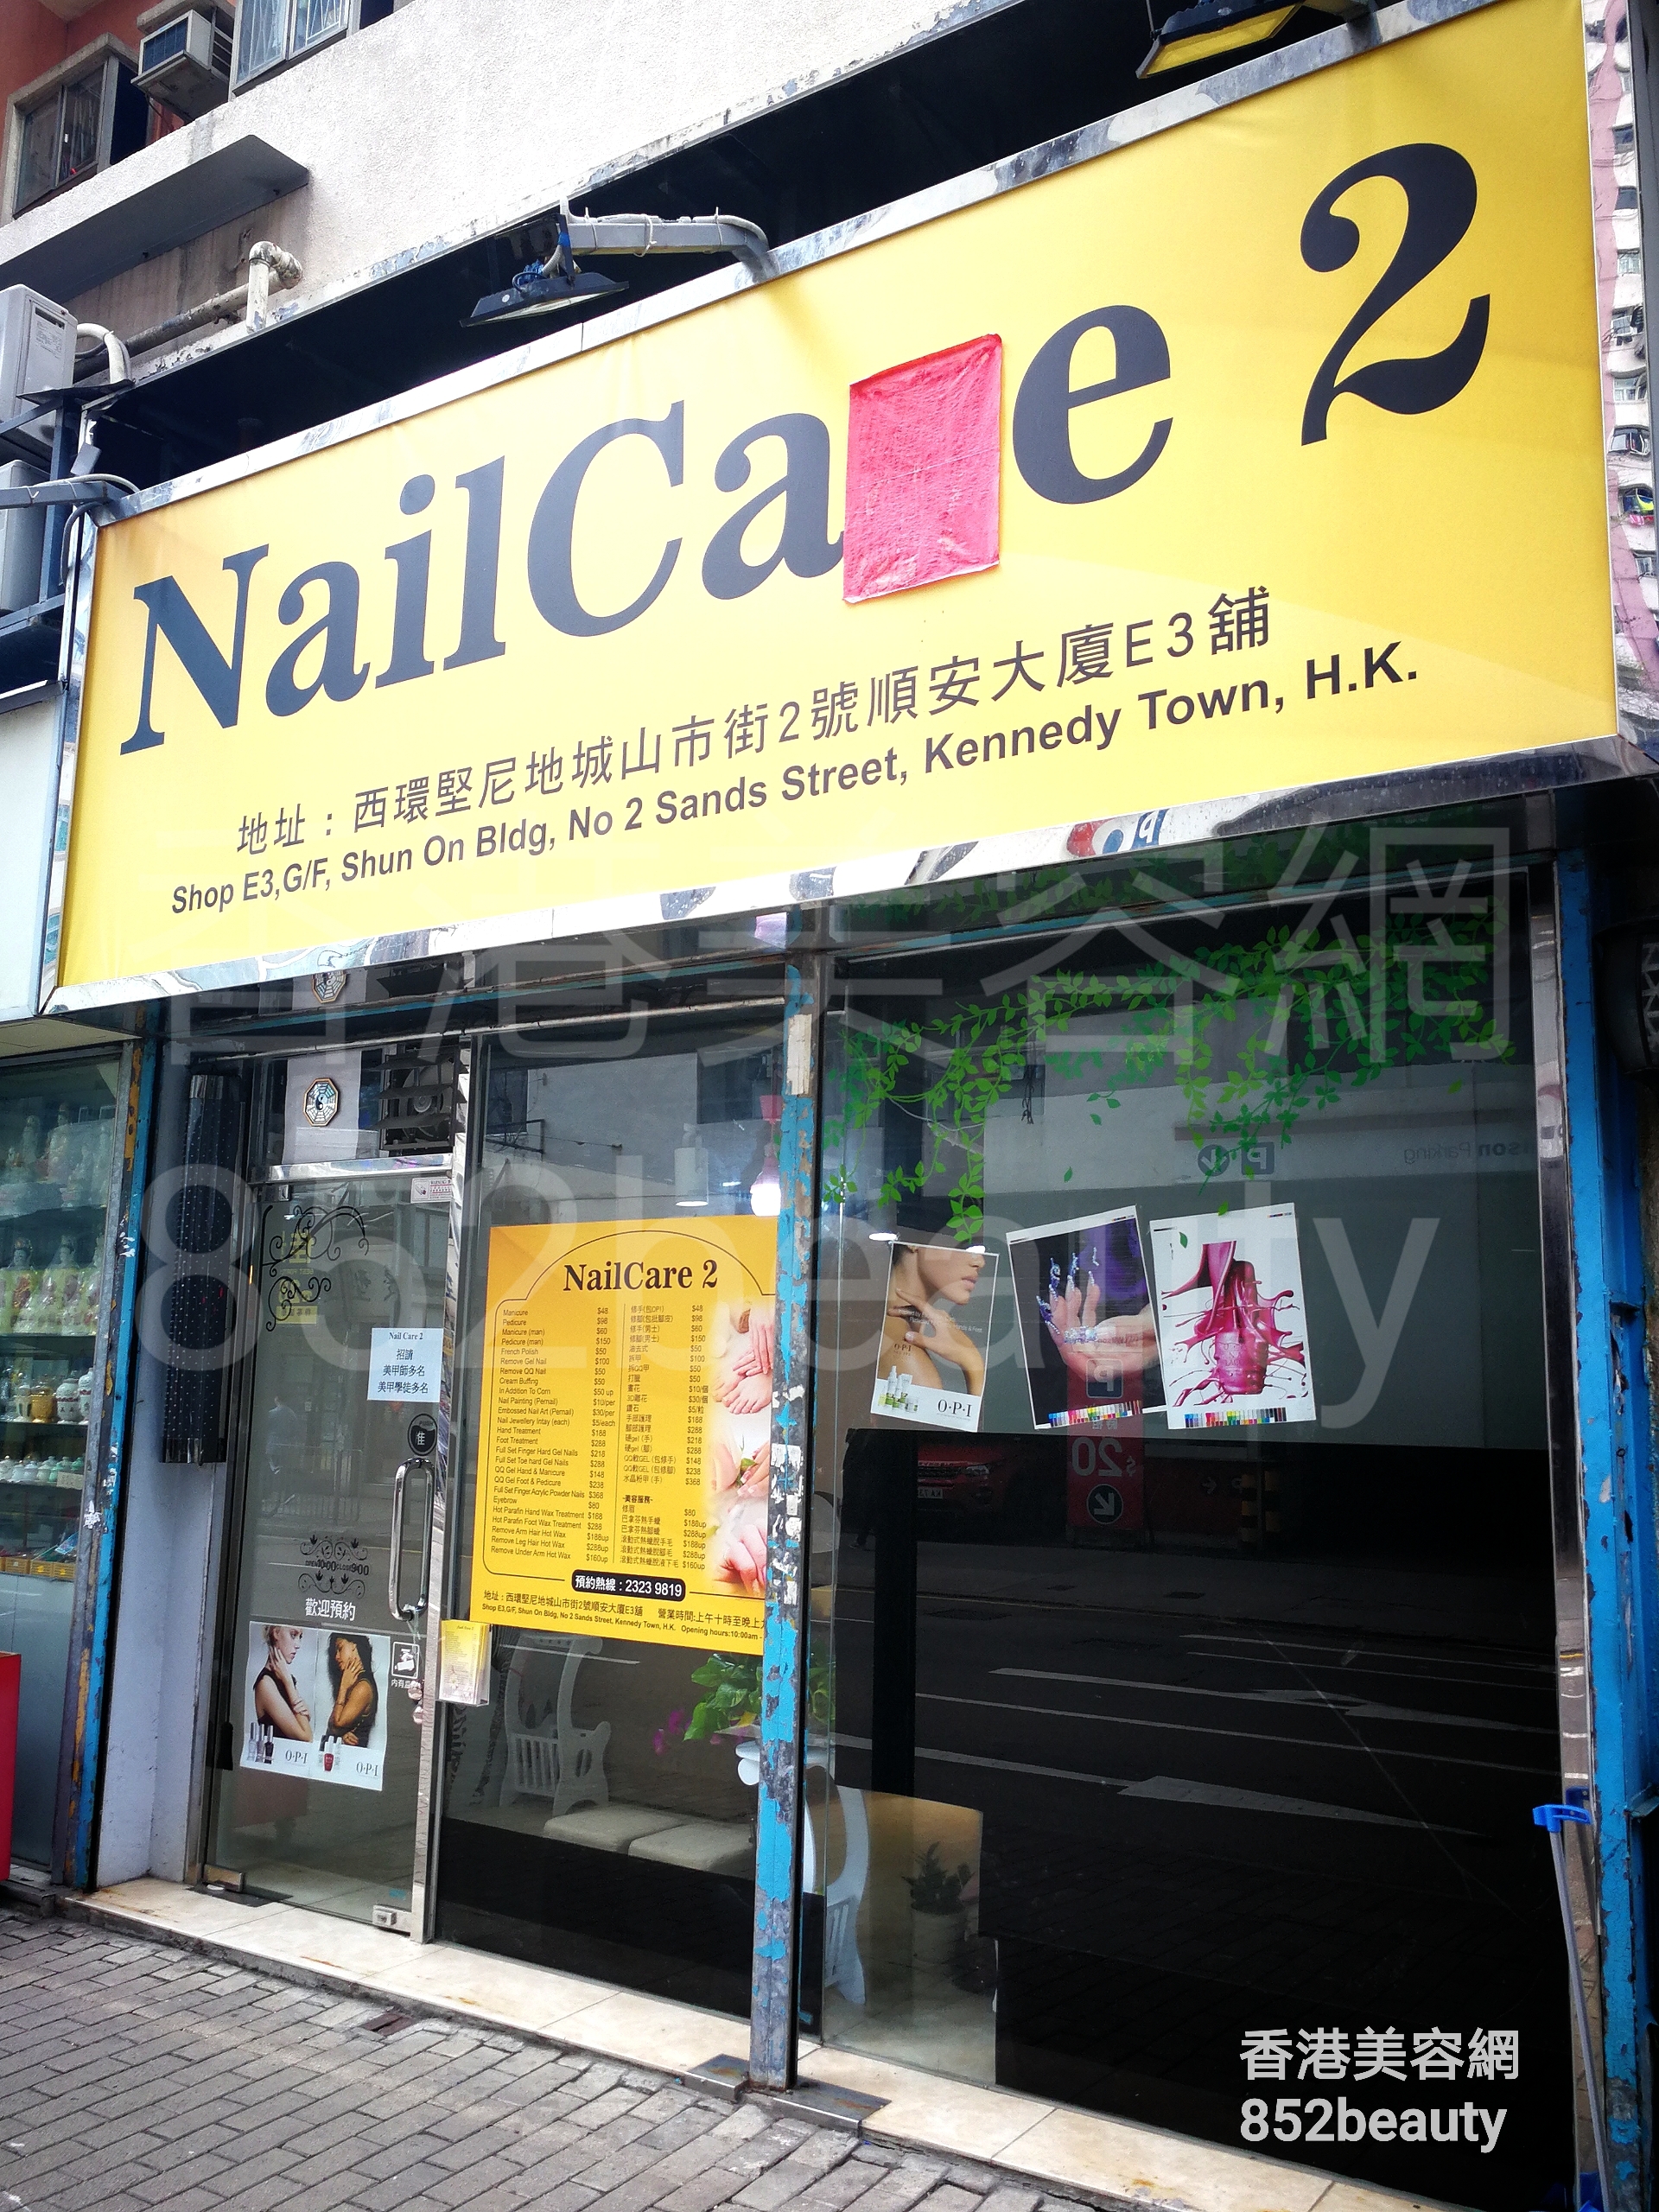 Manicure: NailCare 2